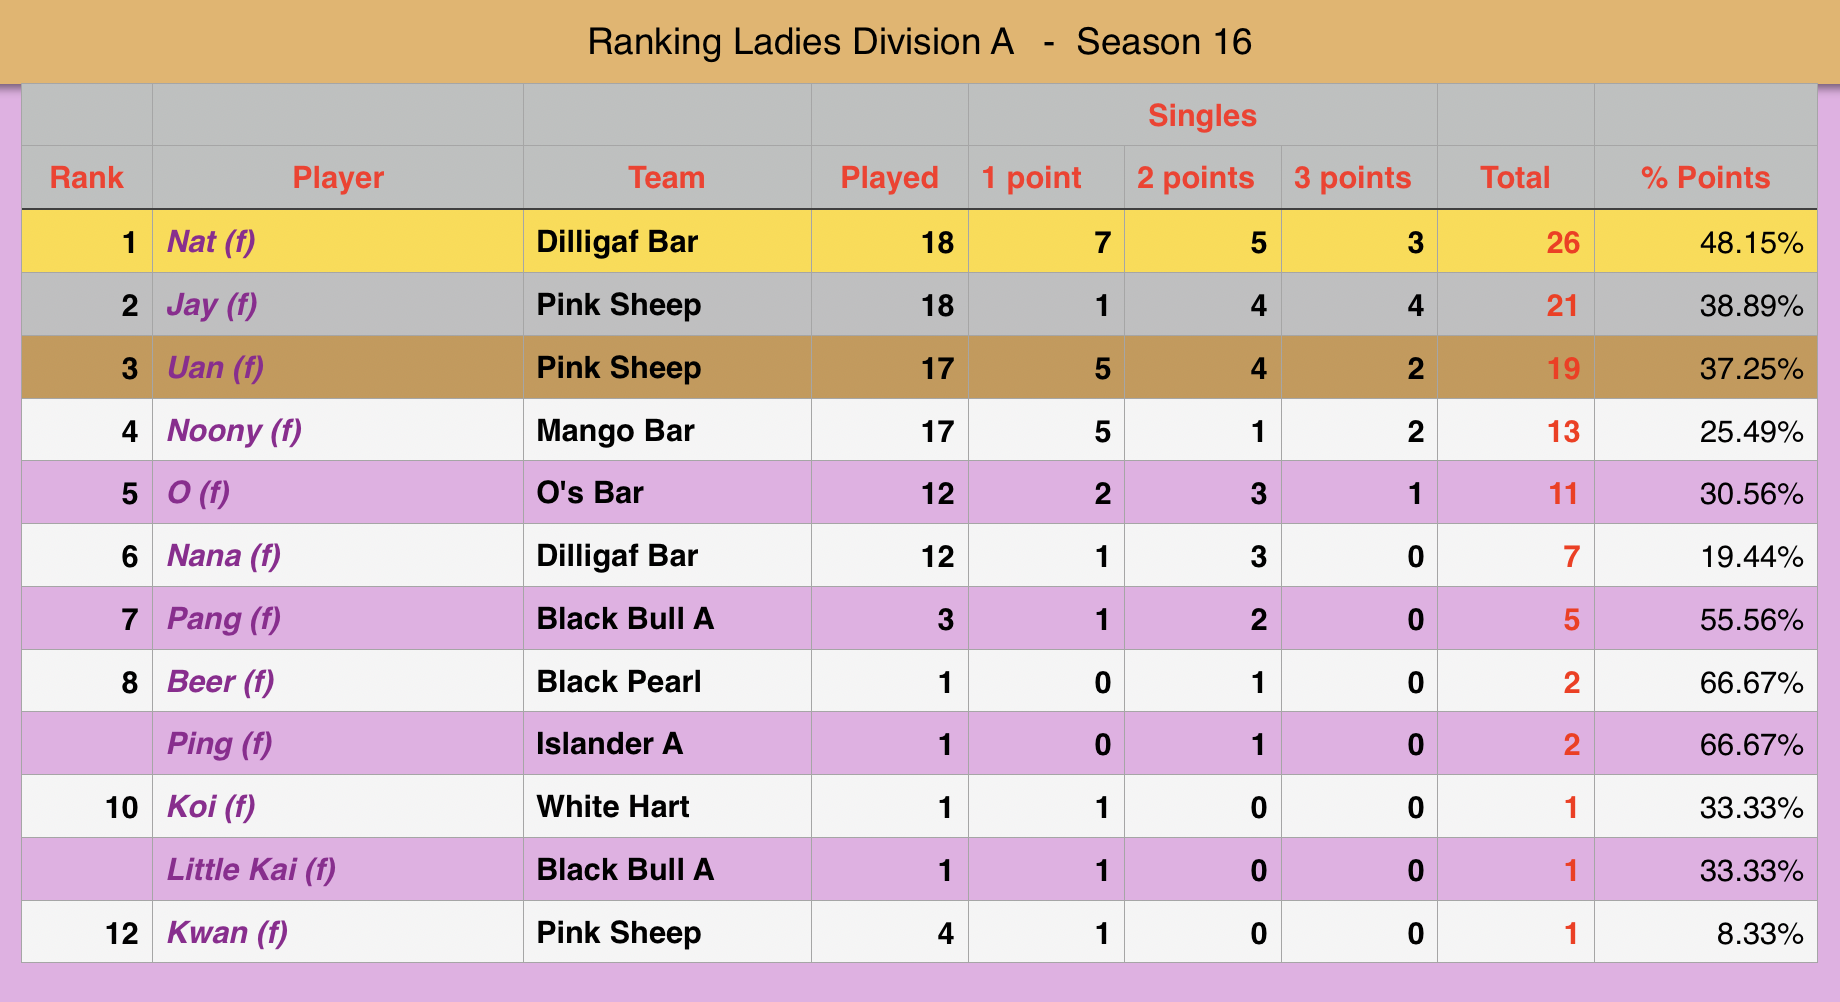 Rawai Pool League individual Rankings